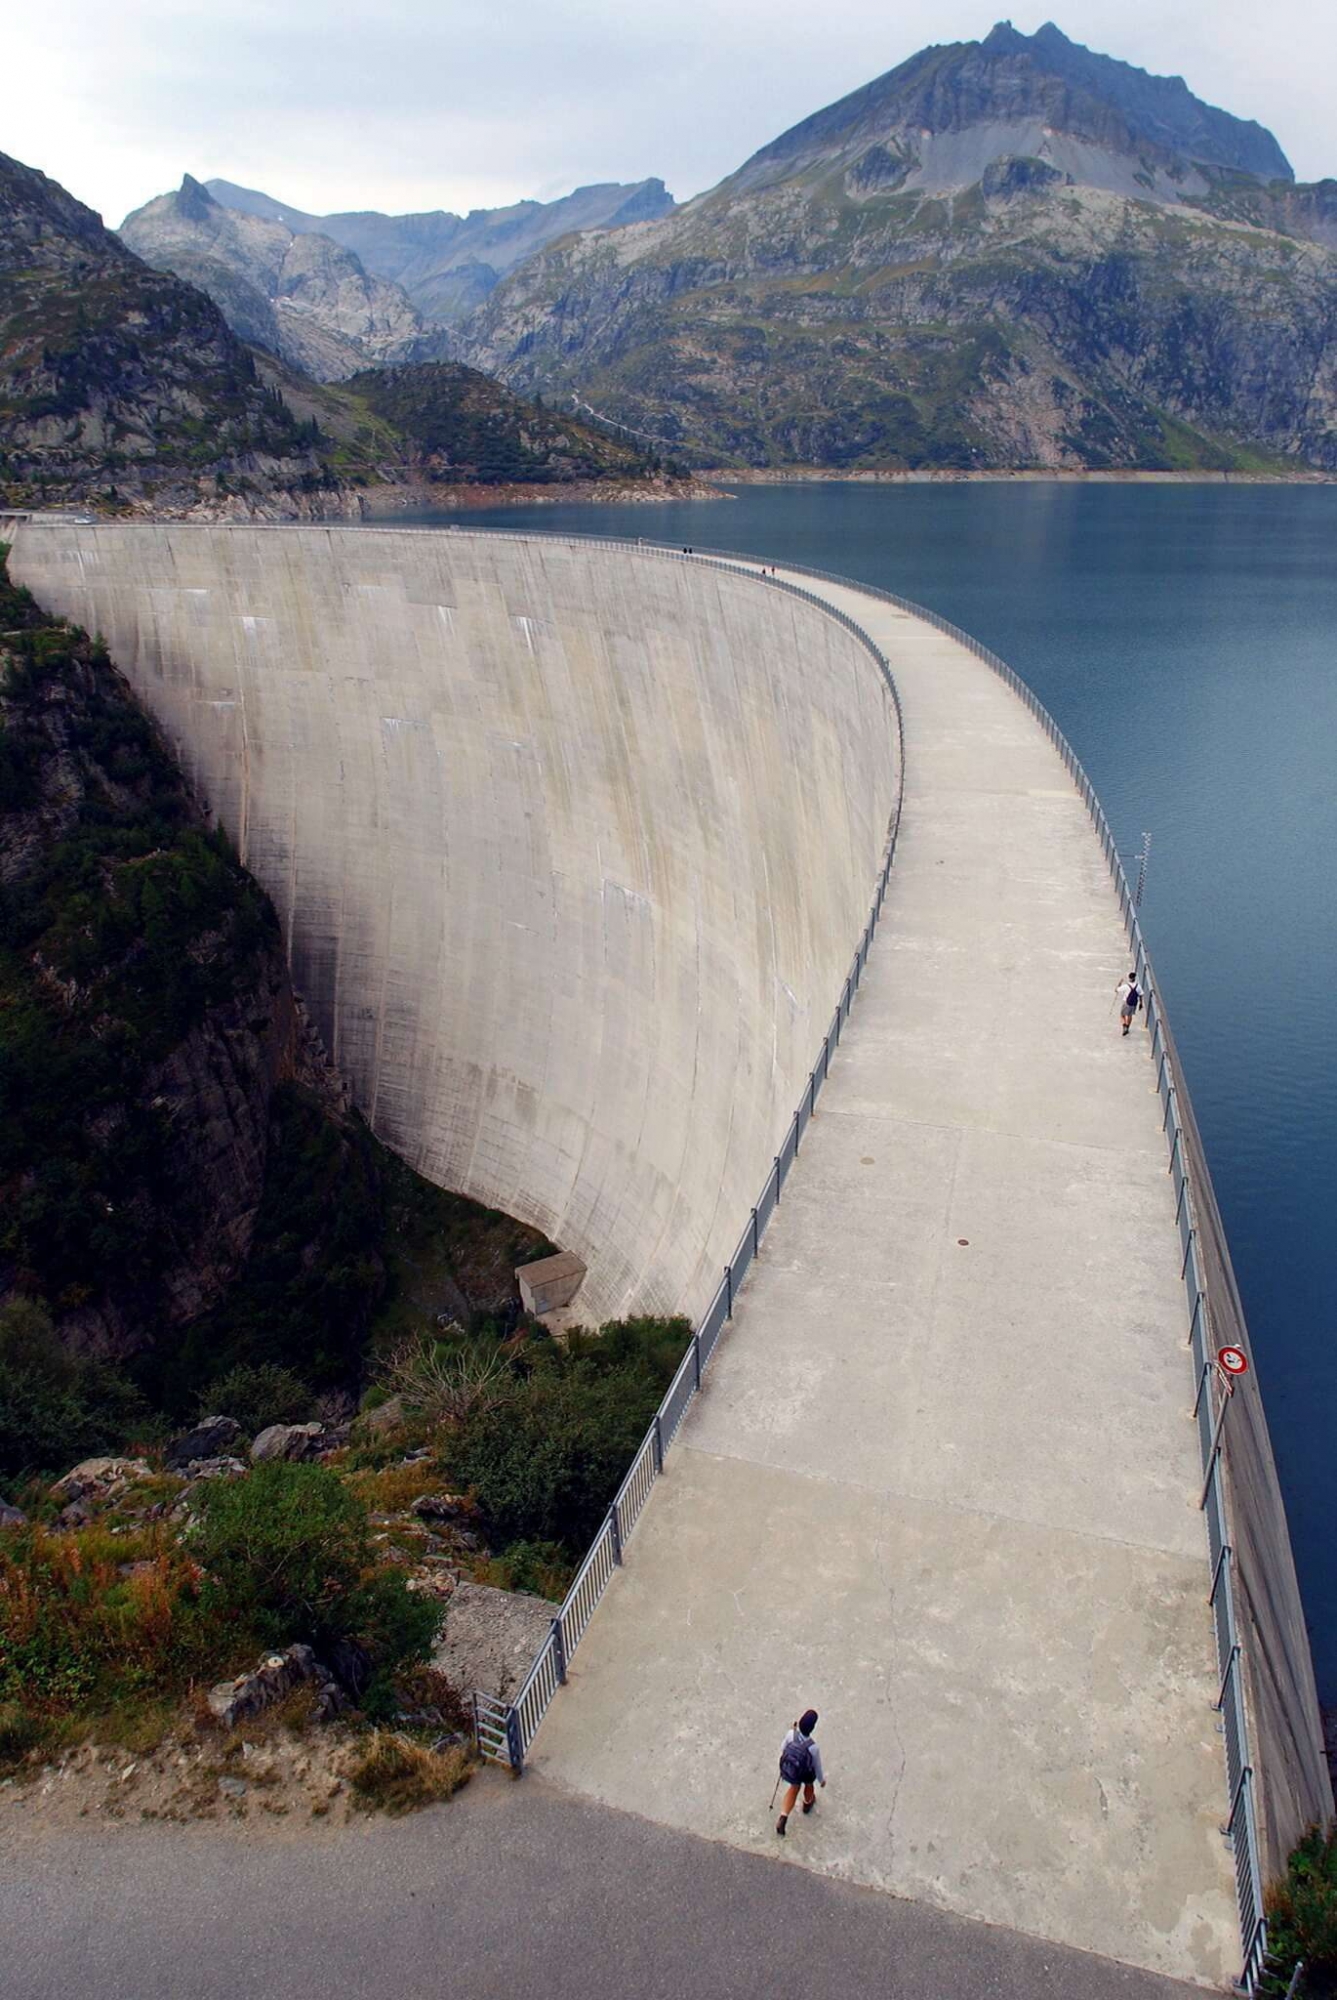 Le barrage d'Emosson

(KEYSTONE/Olivier Maire) ENERGIE